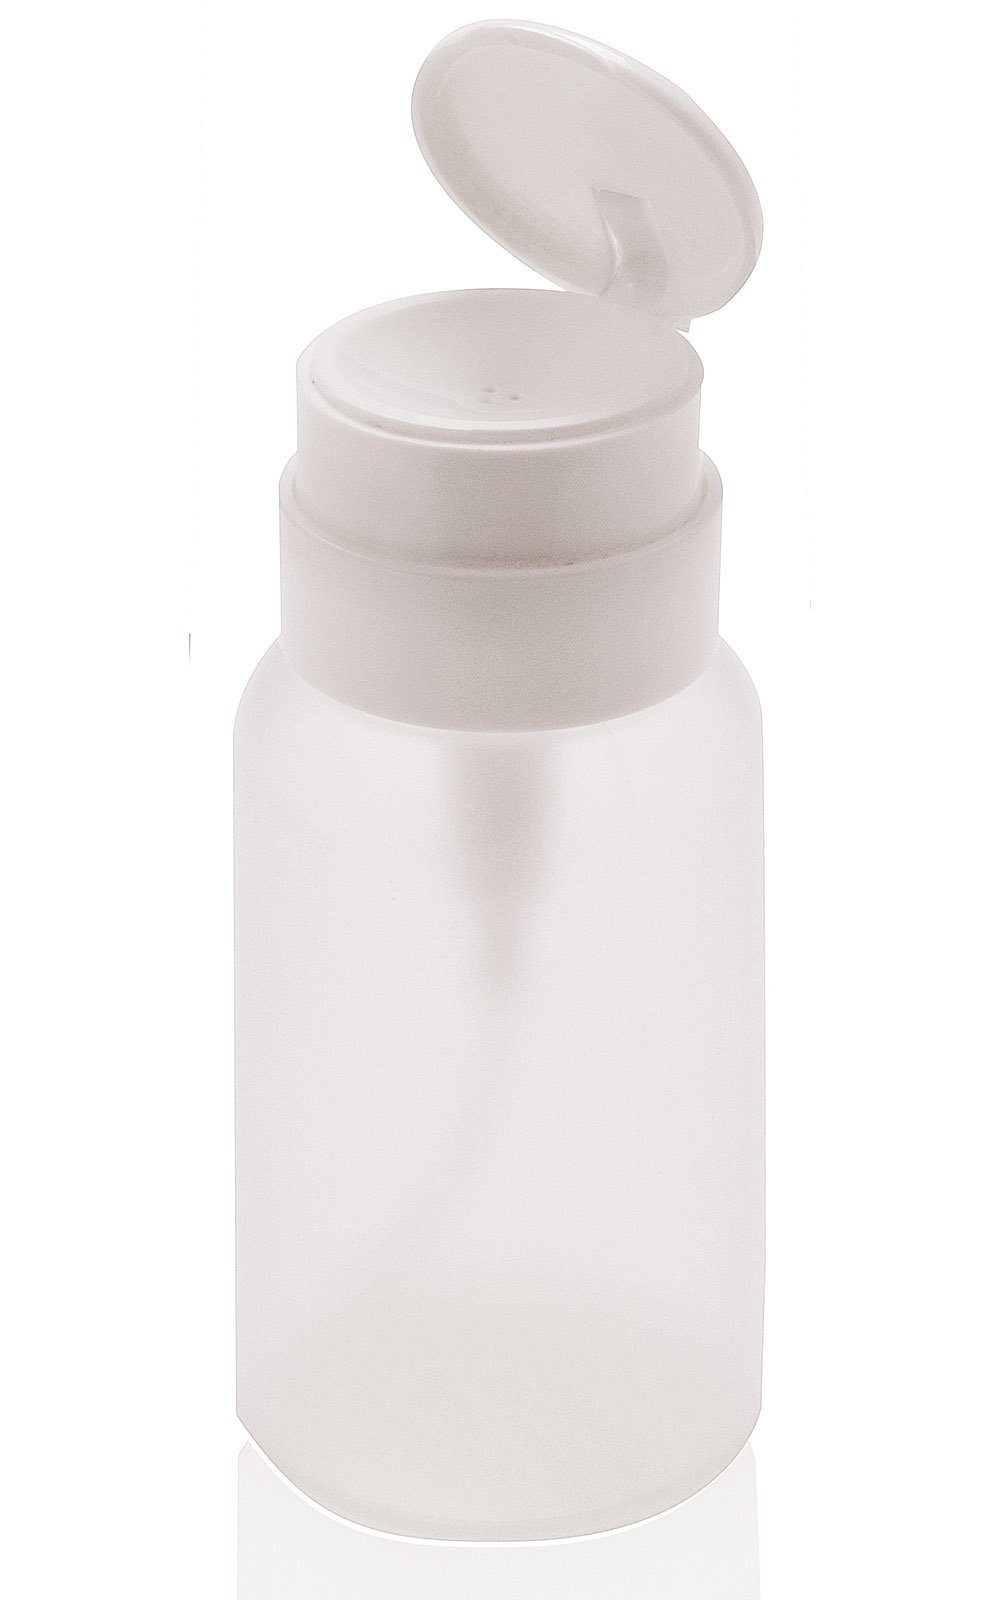 Kosmetex Nagel Pumpflasche Pumper, transparent, 200ml | Nägel